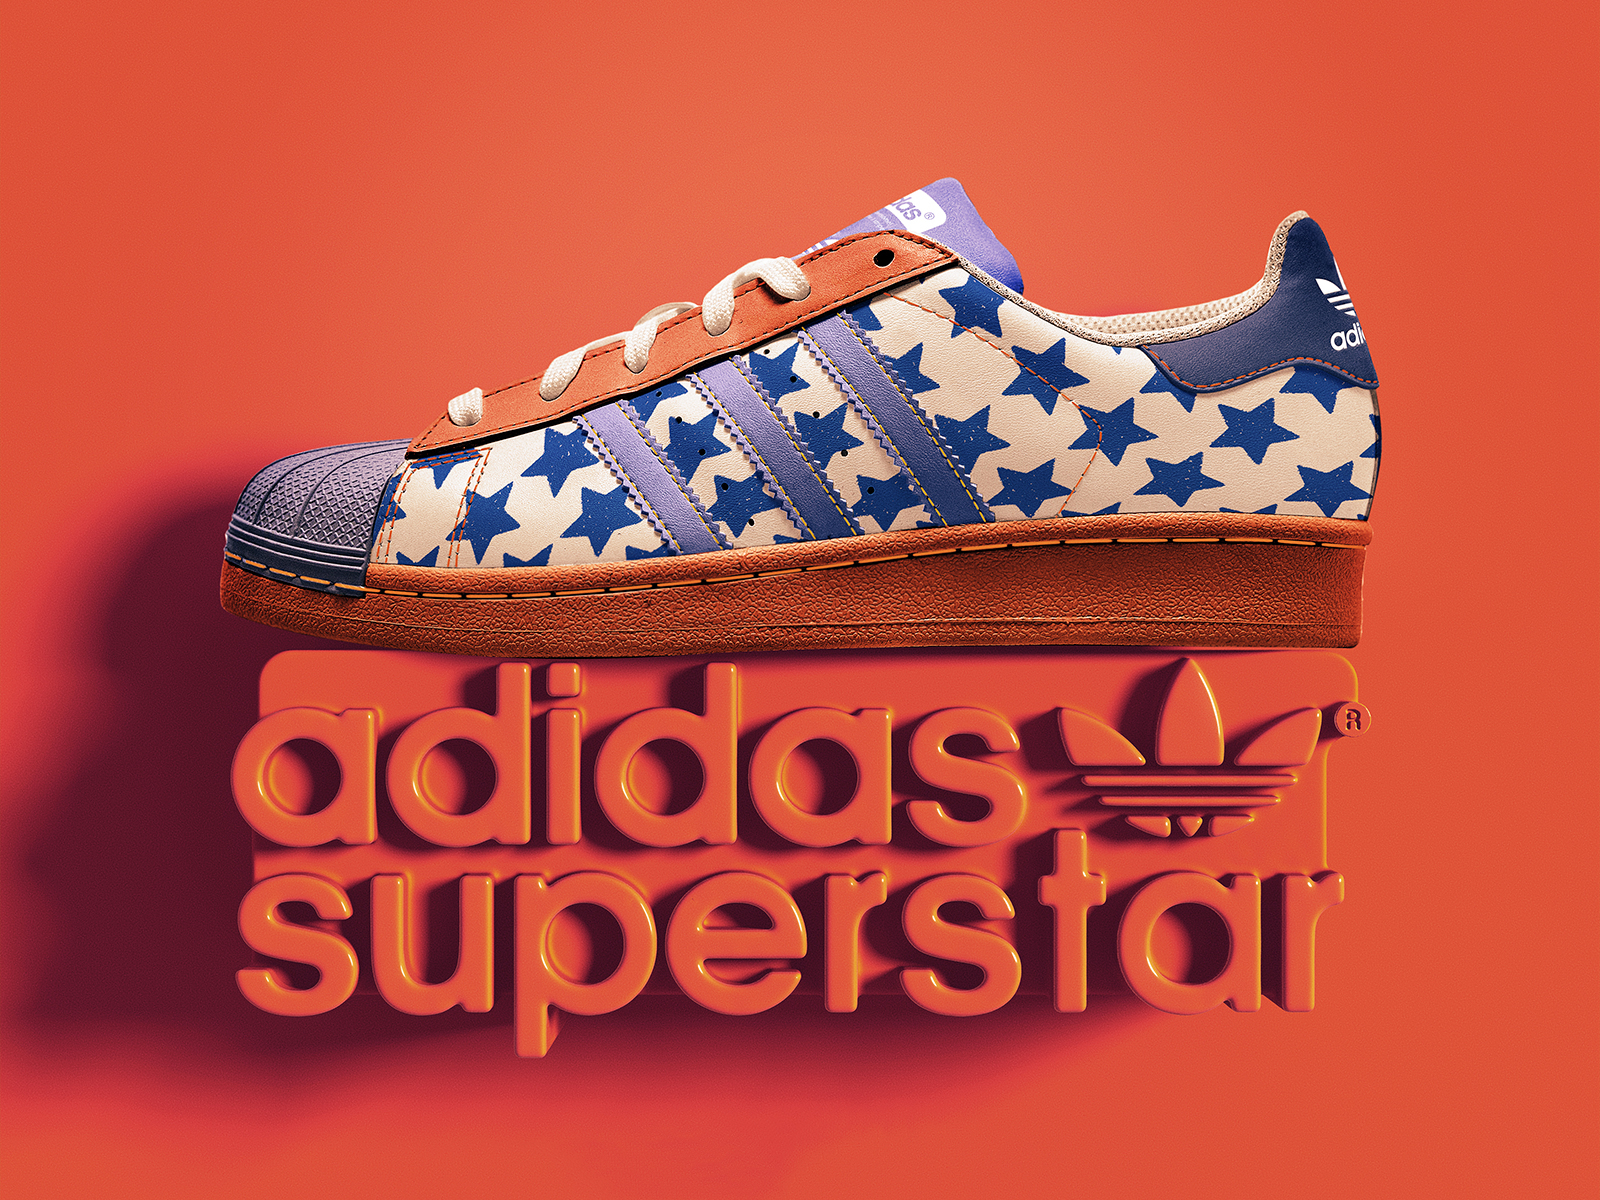 Adidas superstar presentation by Gabov Arkadiy on Dribbble